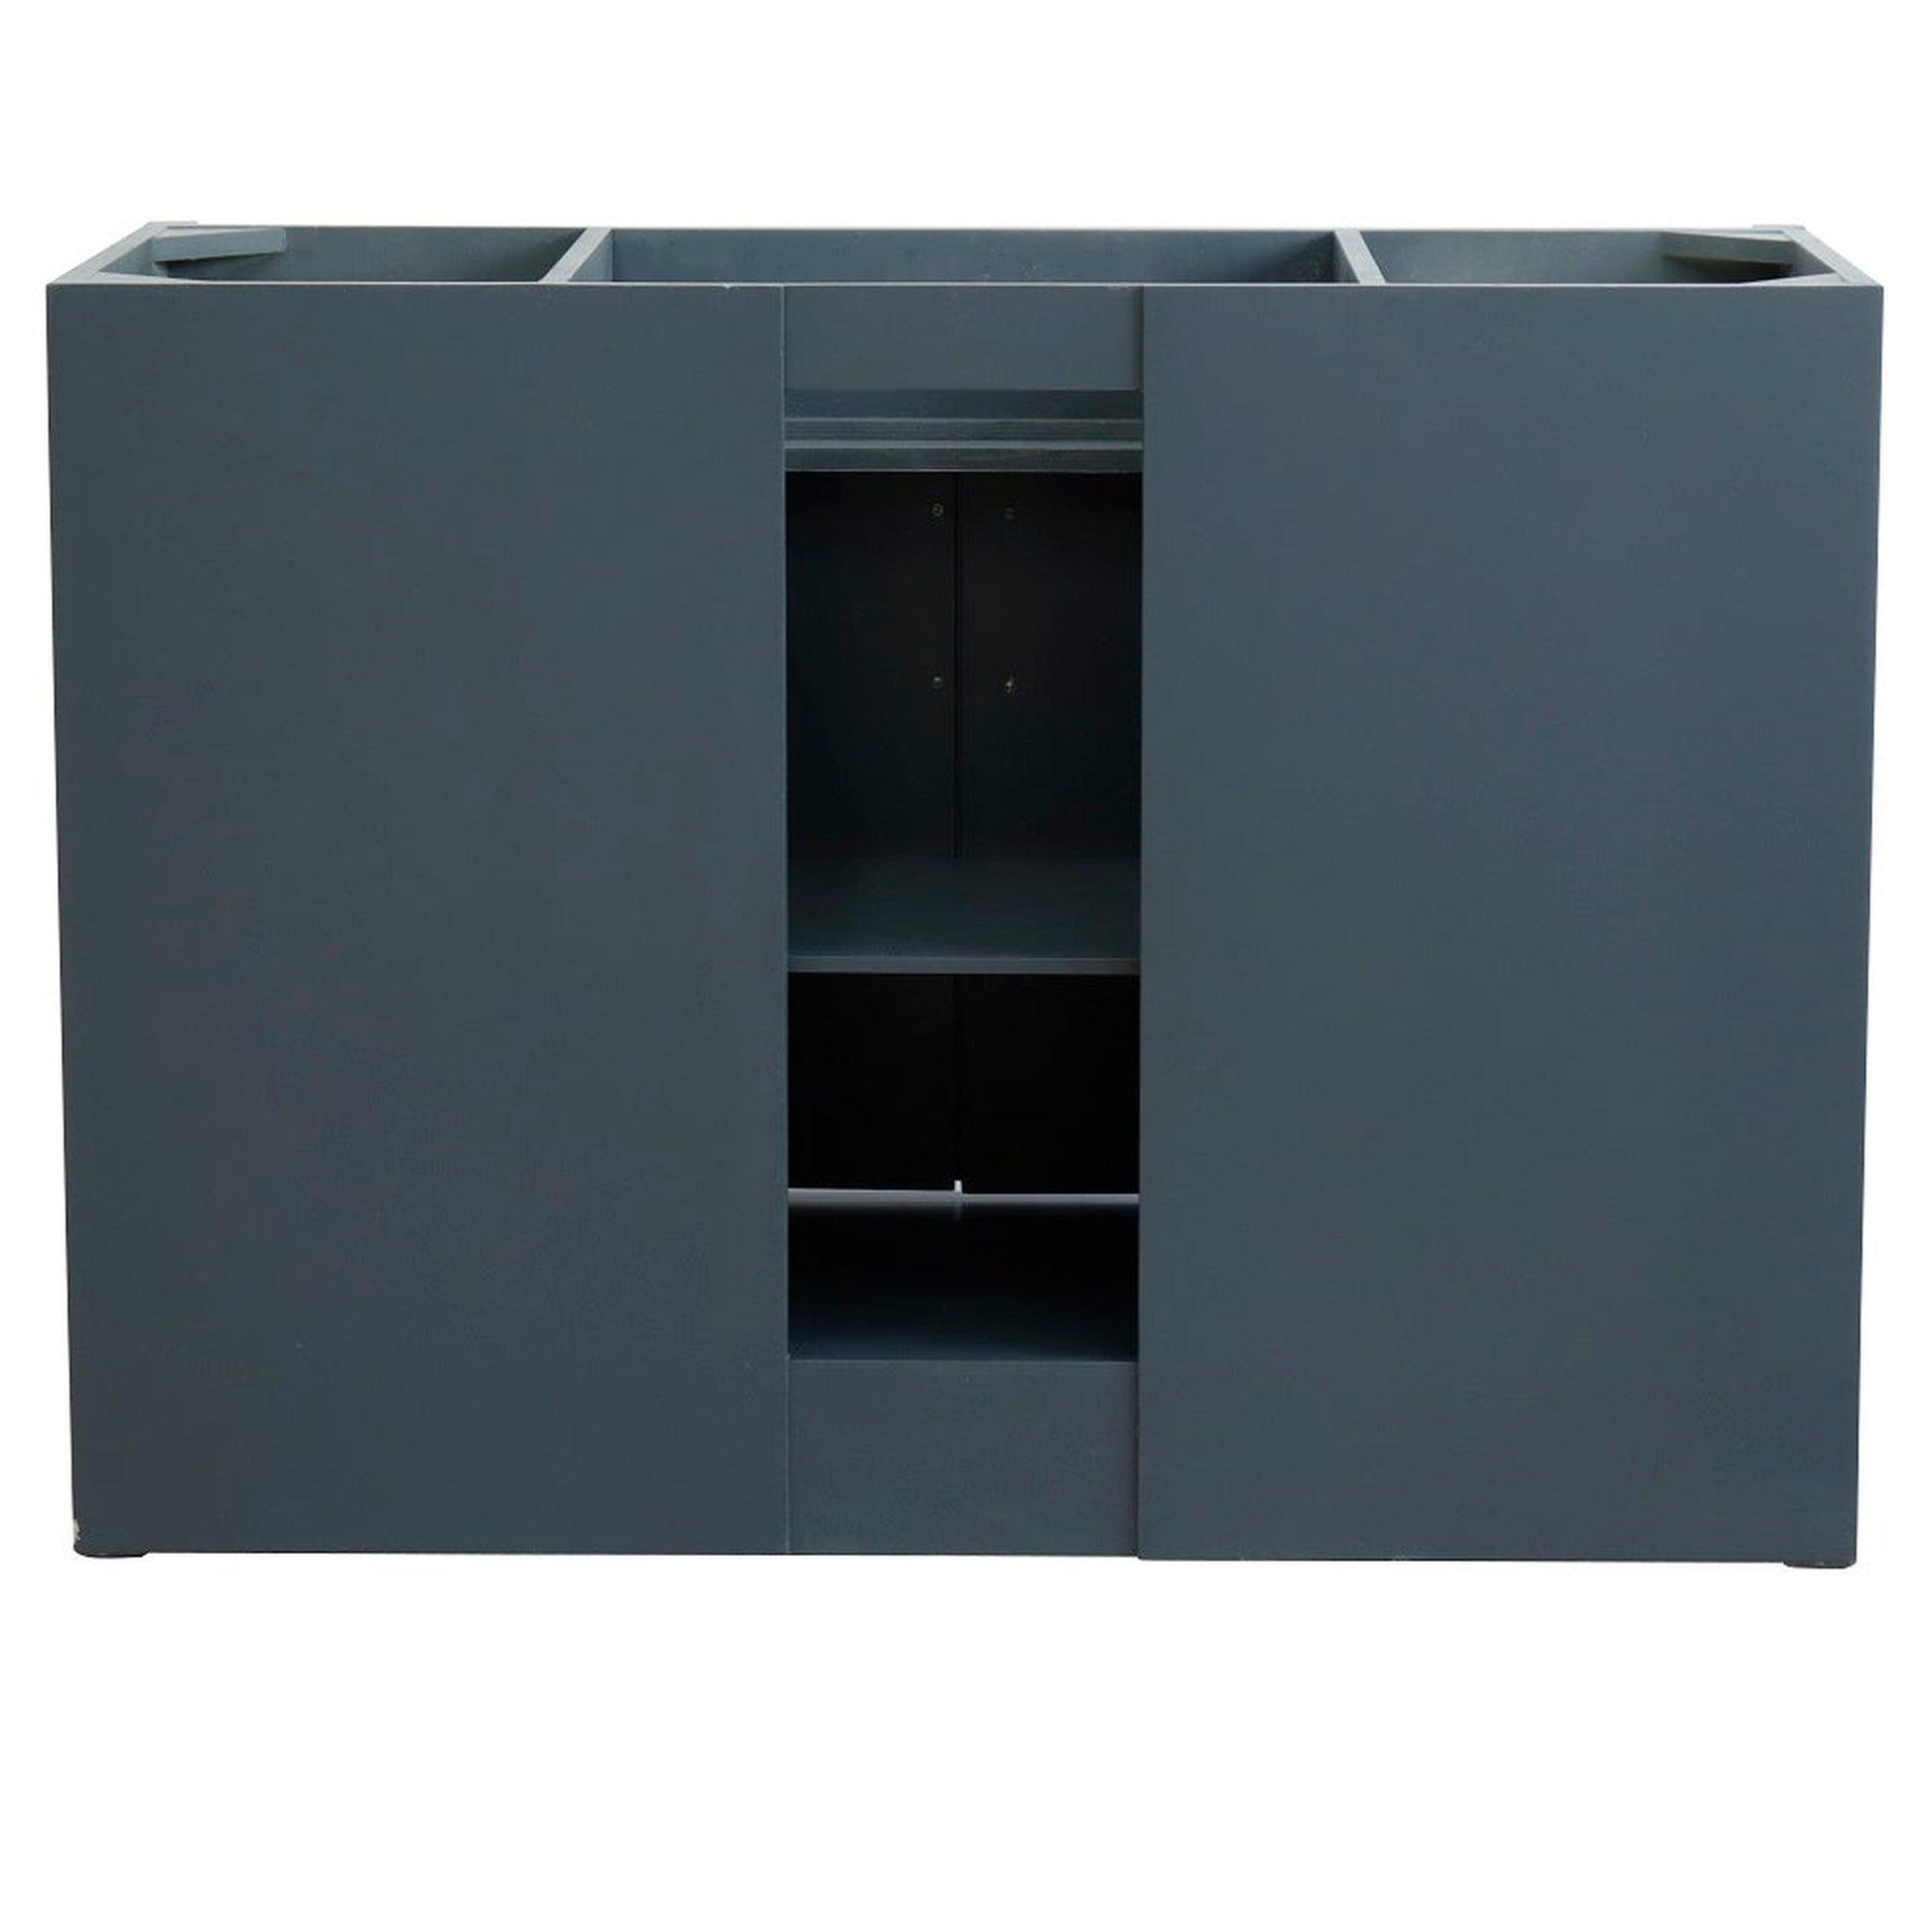 Bellaterra Home Terni 49" 2-Door 6-Drawer Dark Gray Freestanding Vanity Set With Ceramic Undermount Oval Sink and Black Galaxy Granite Top